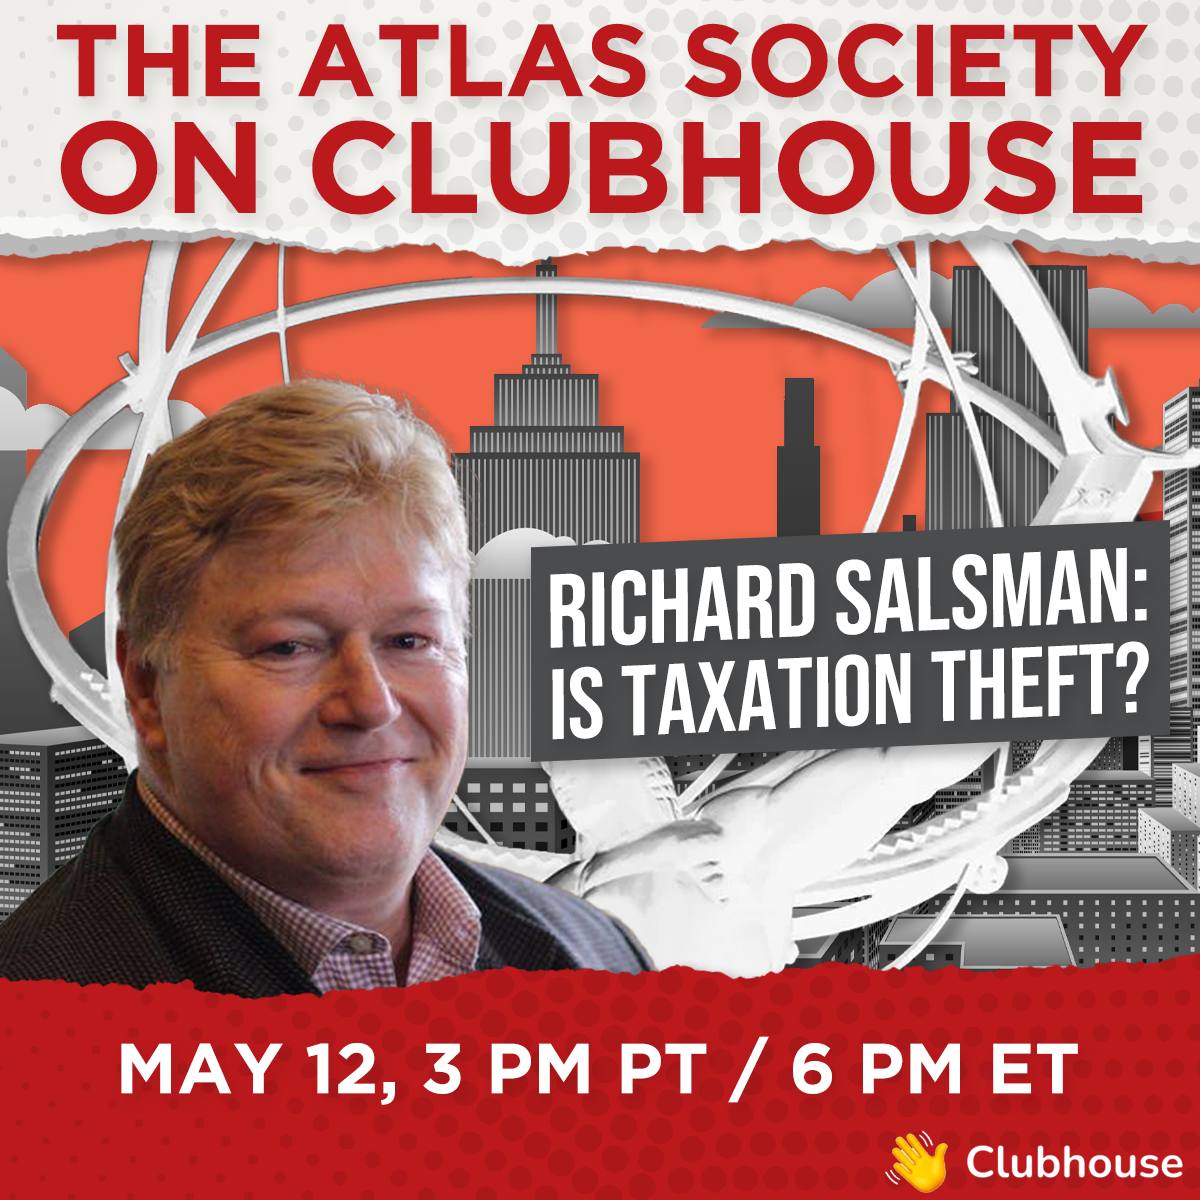 Richard Salsman - Is Taxation Theft?